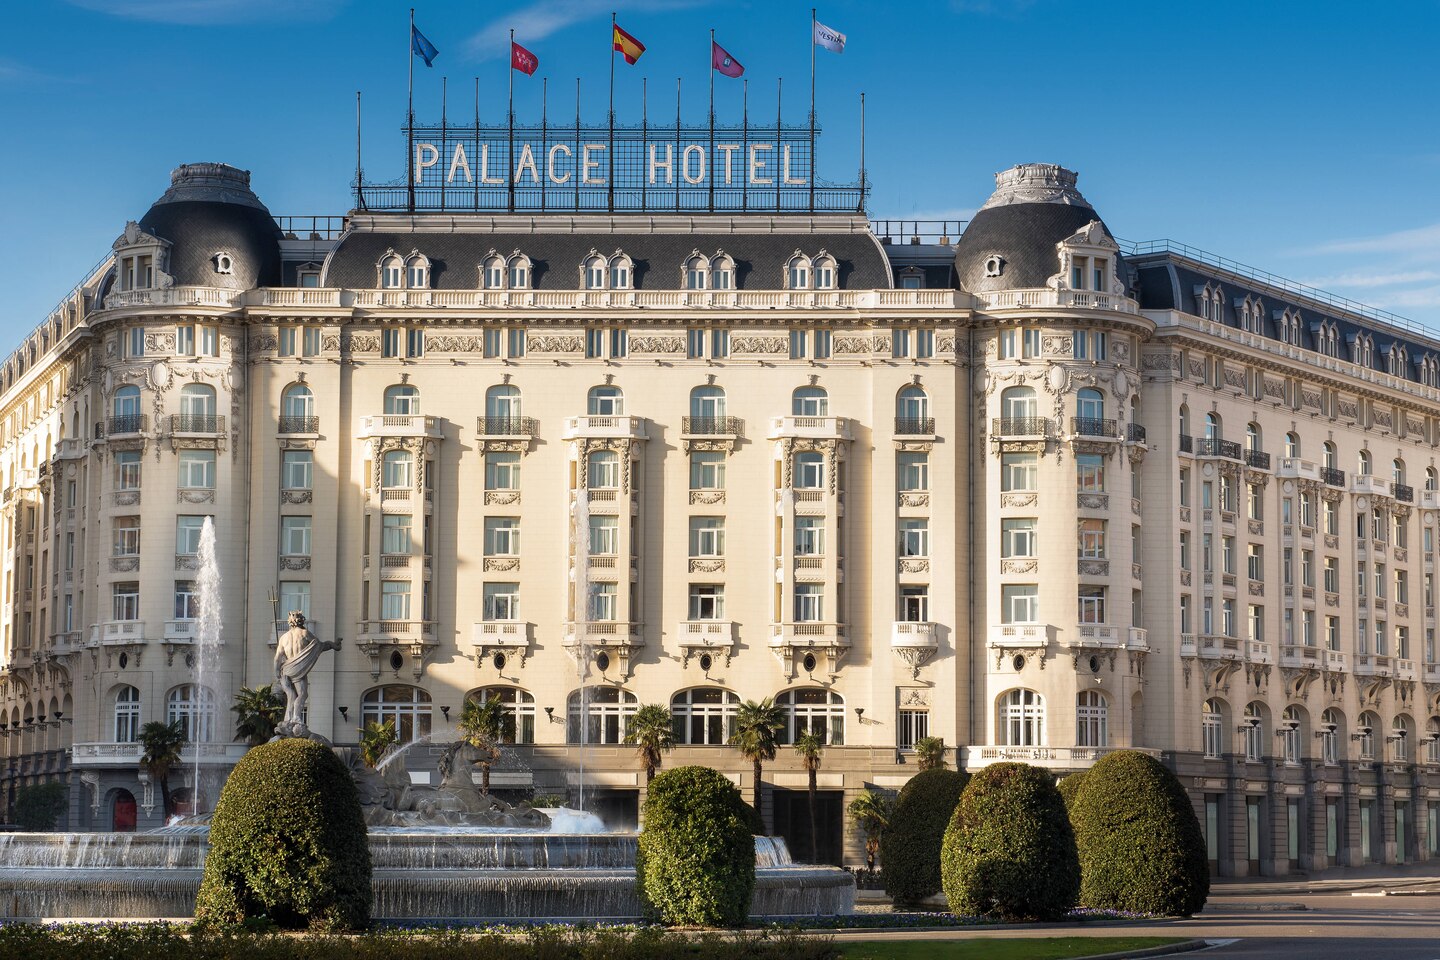 westin palace hotel madrid, photo from website